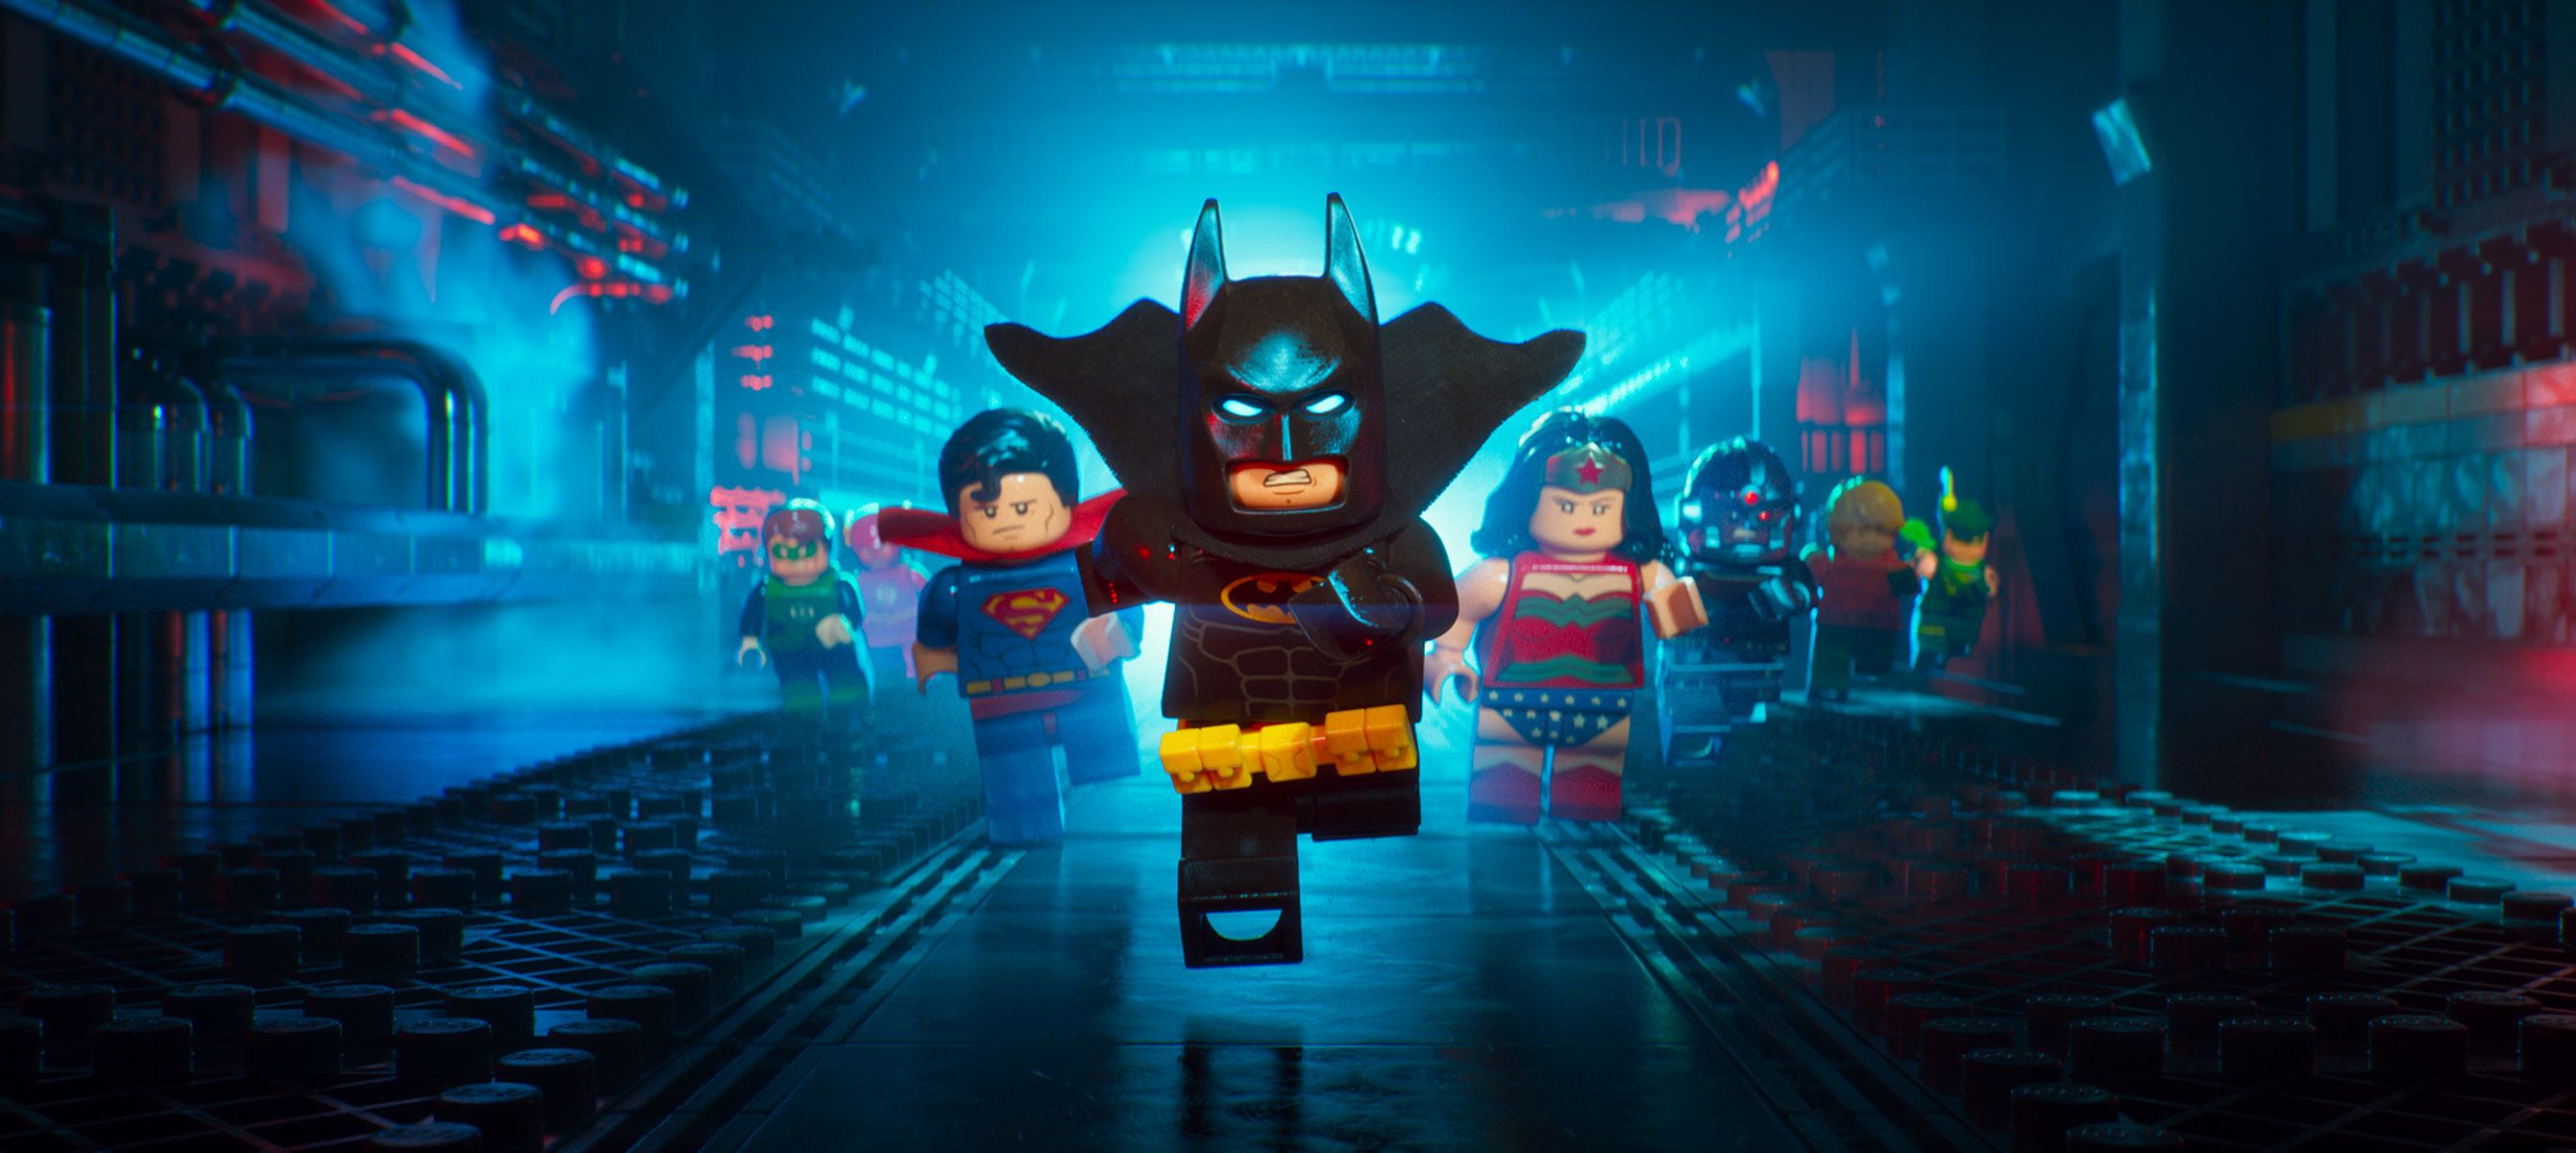 The Lego Batman Movie directed